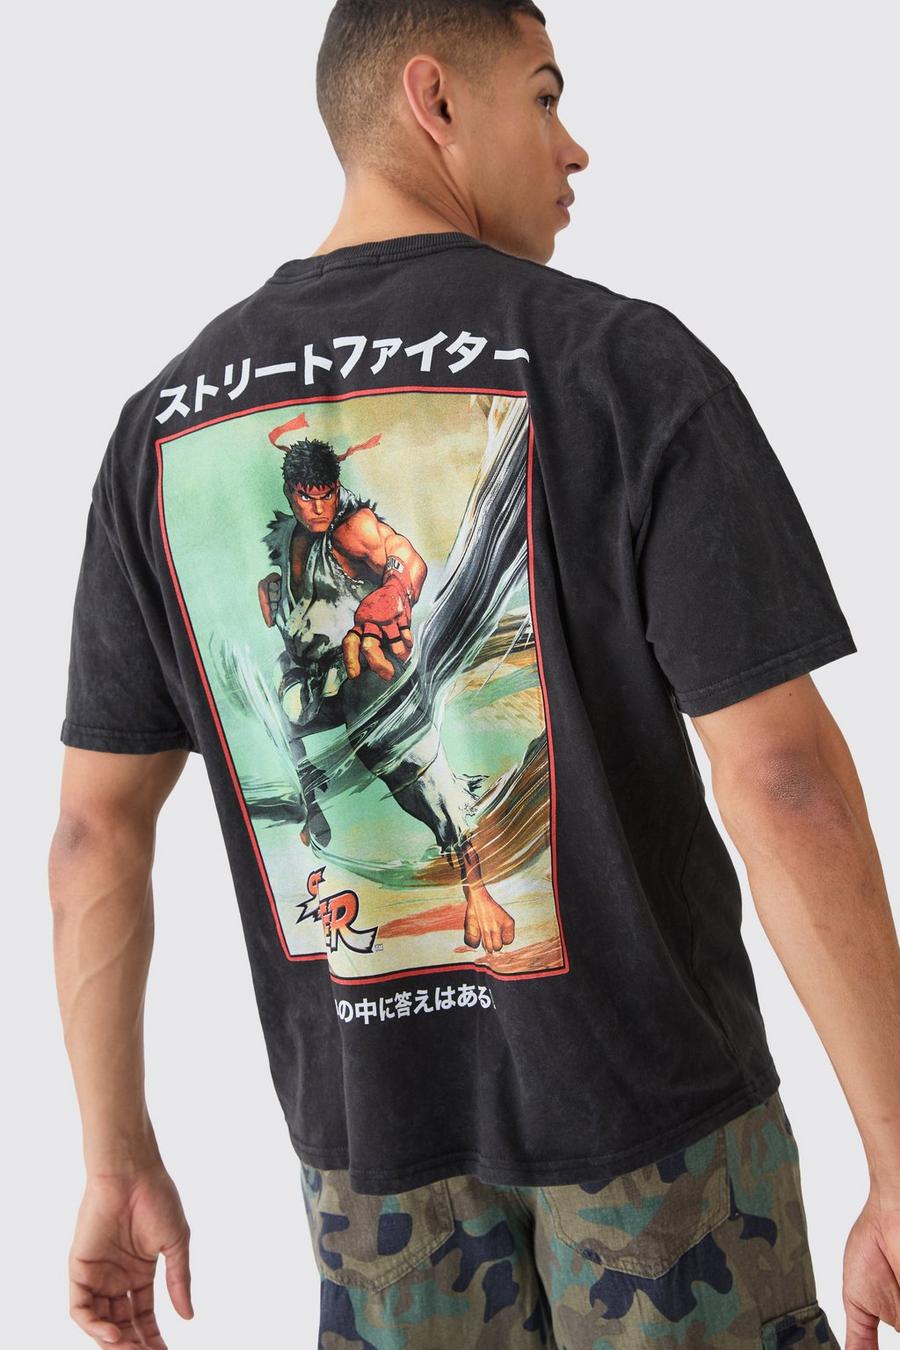 Camiseta oversize con estampado de anime de Street Fighter, Black